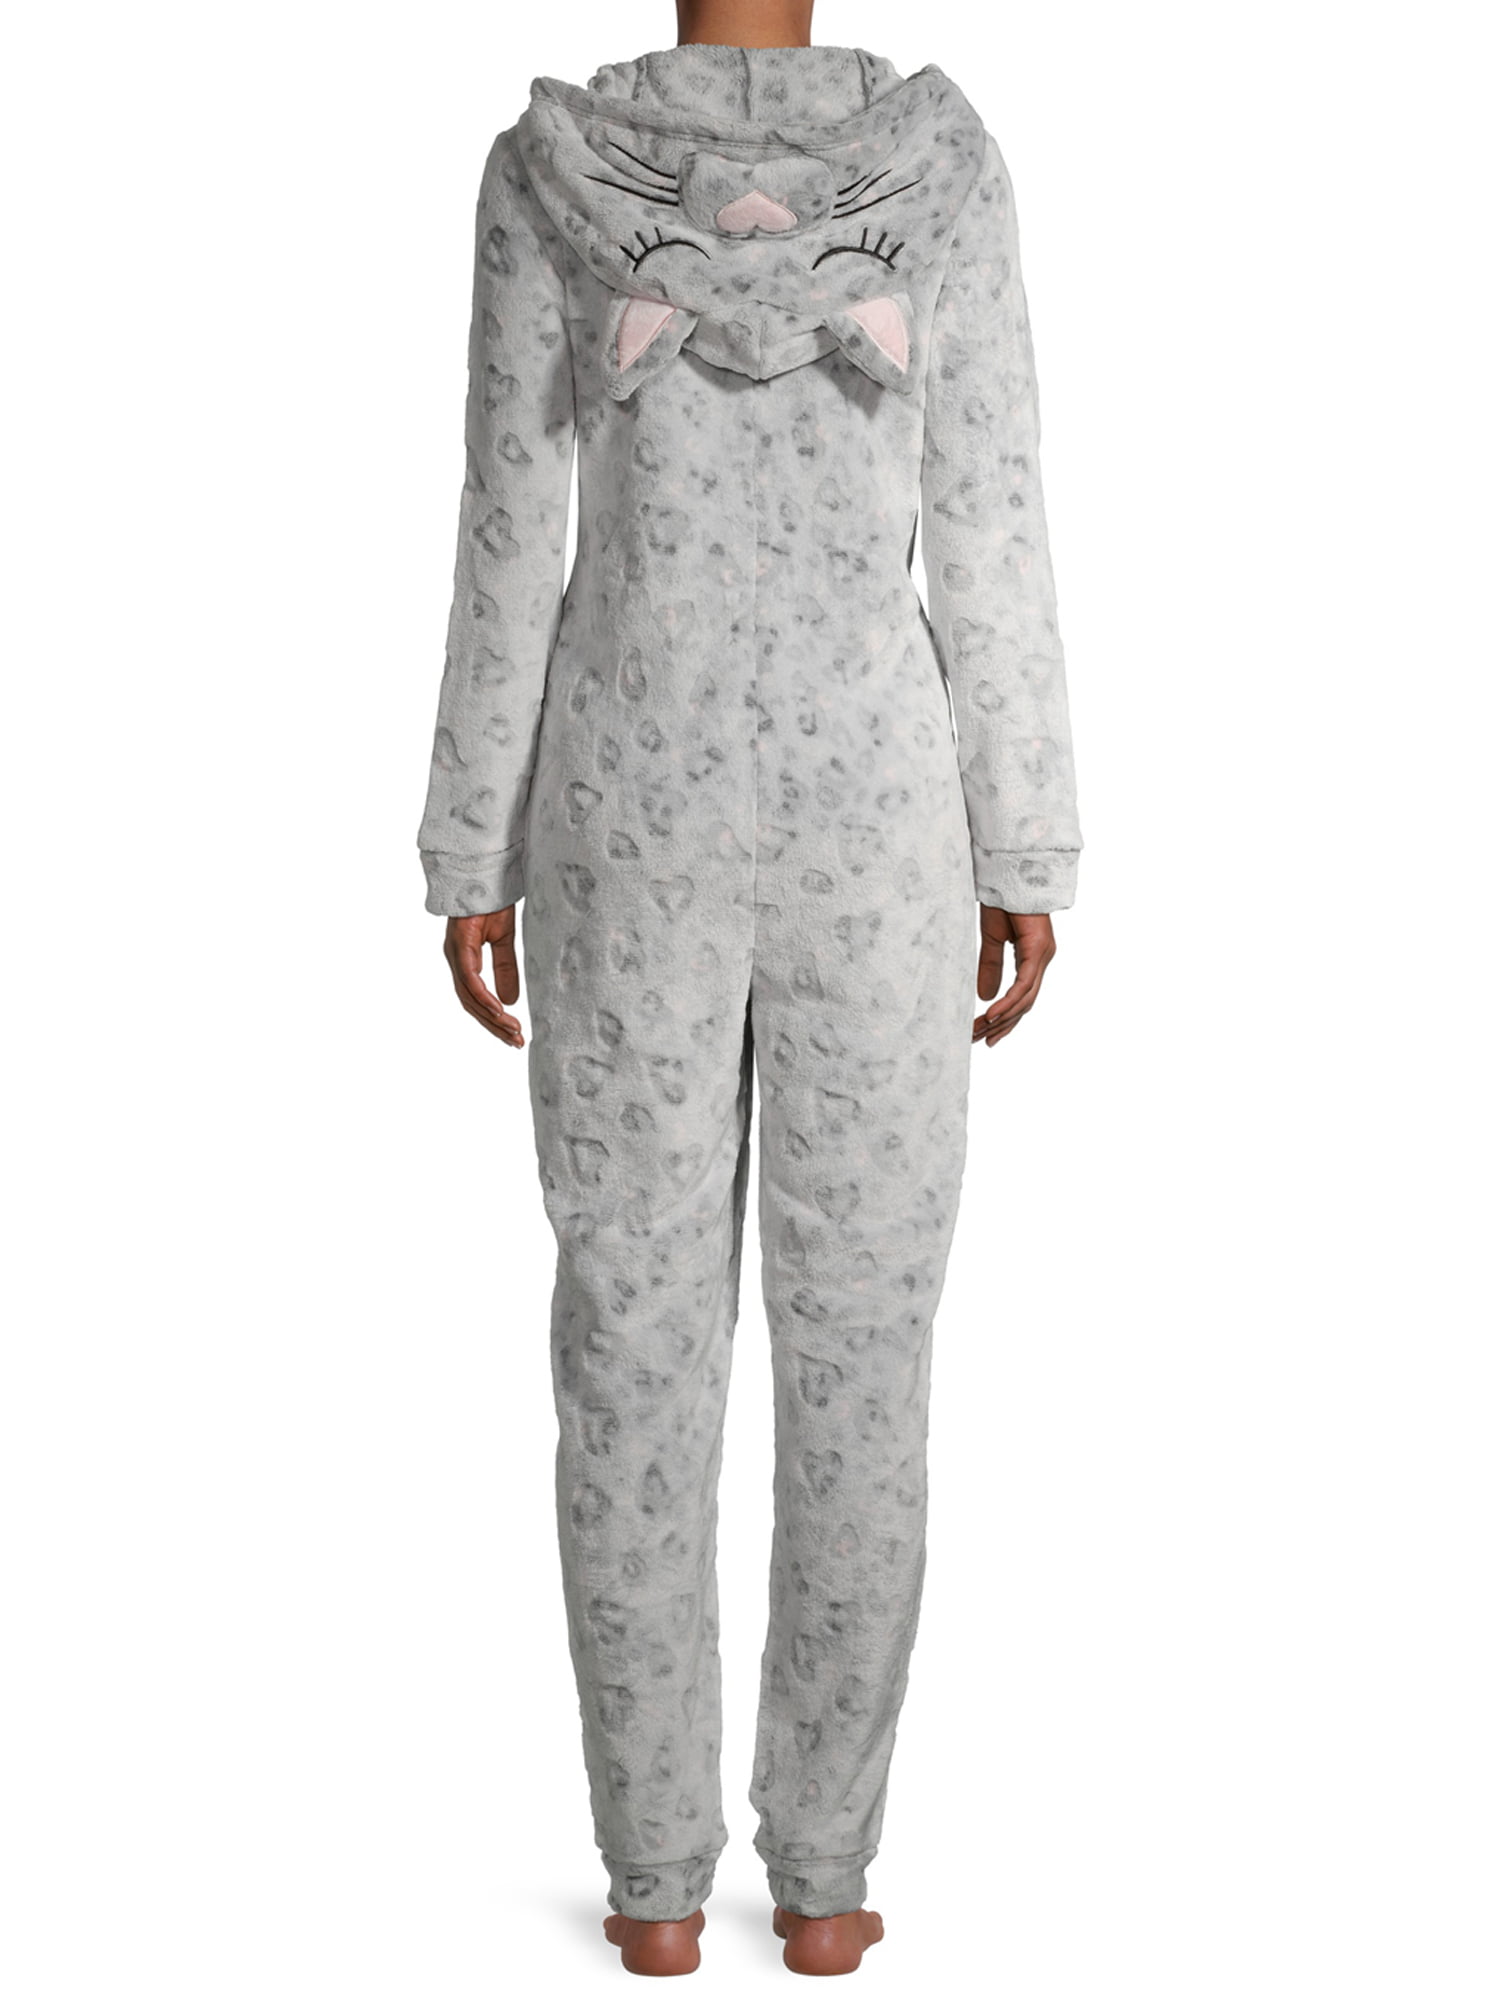 Union Grey & Women\'s Pajama Cat Dreams Suit Peace, Love Print